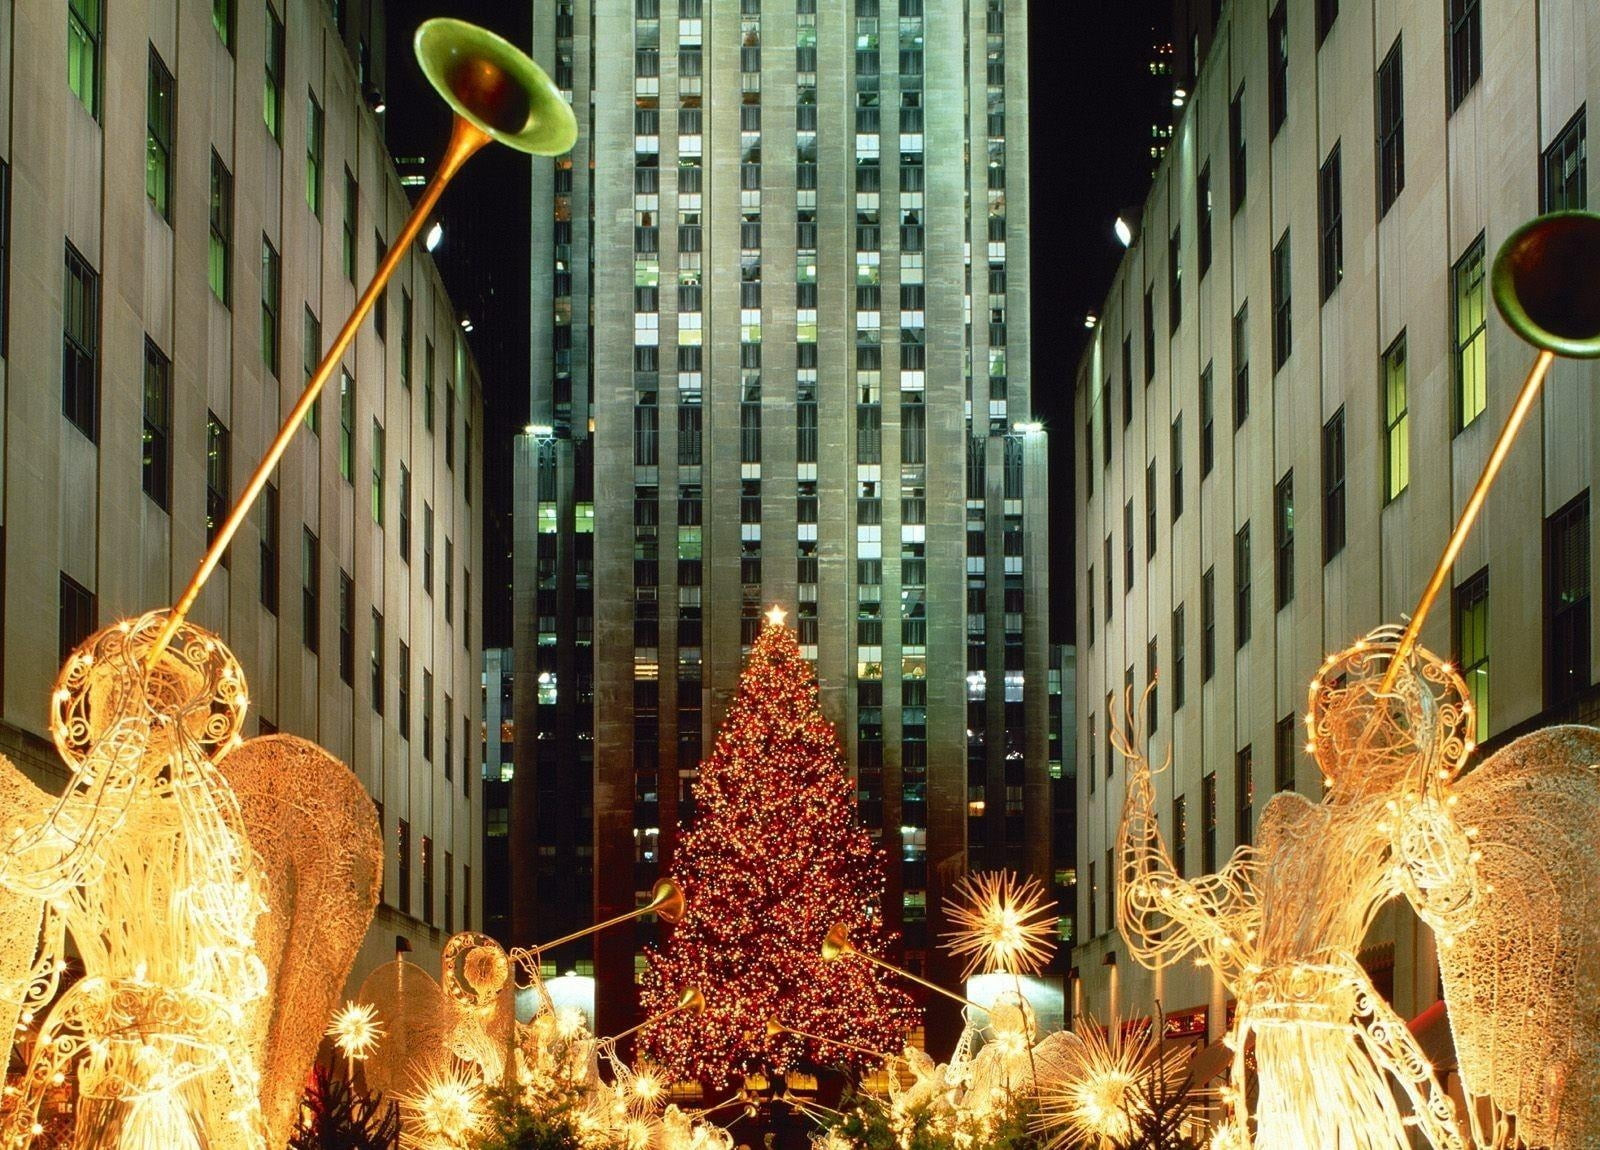 Rockefeller Center Tree, garland, figurines, skyscrapers, city